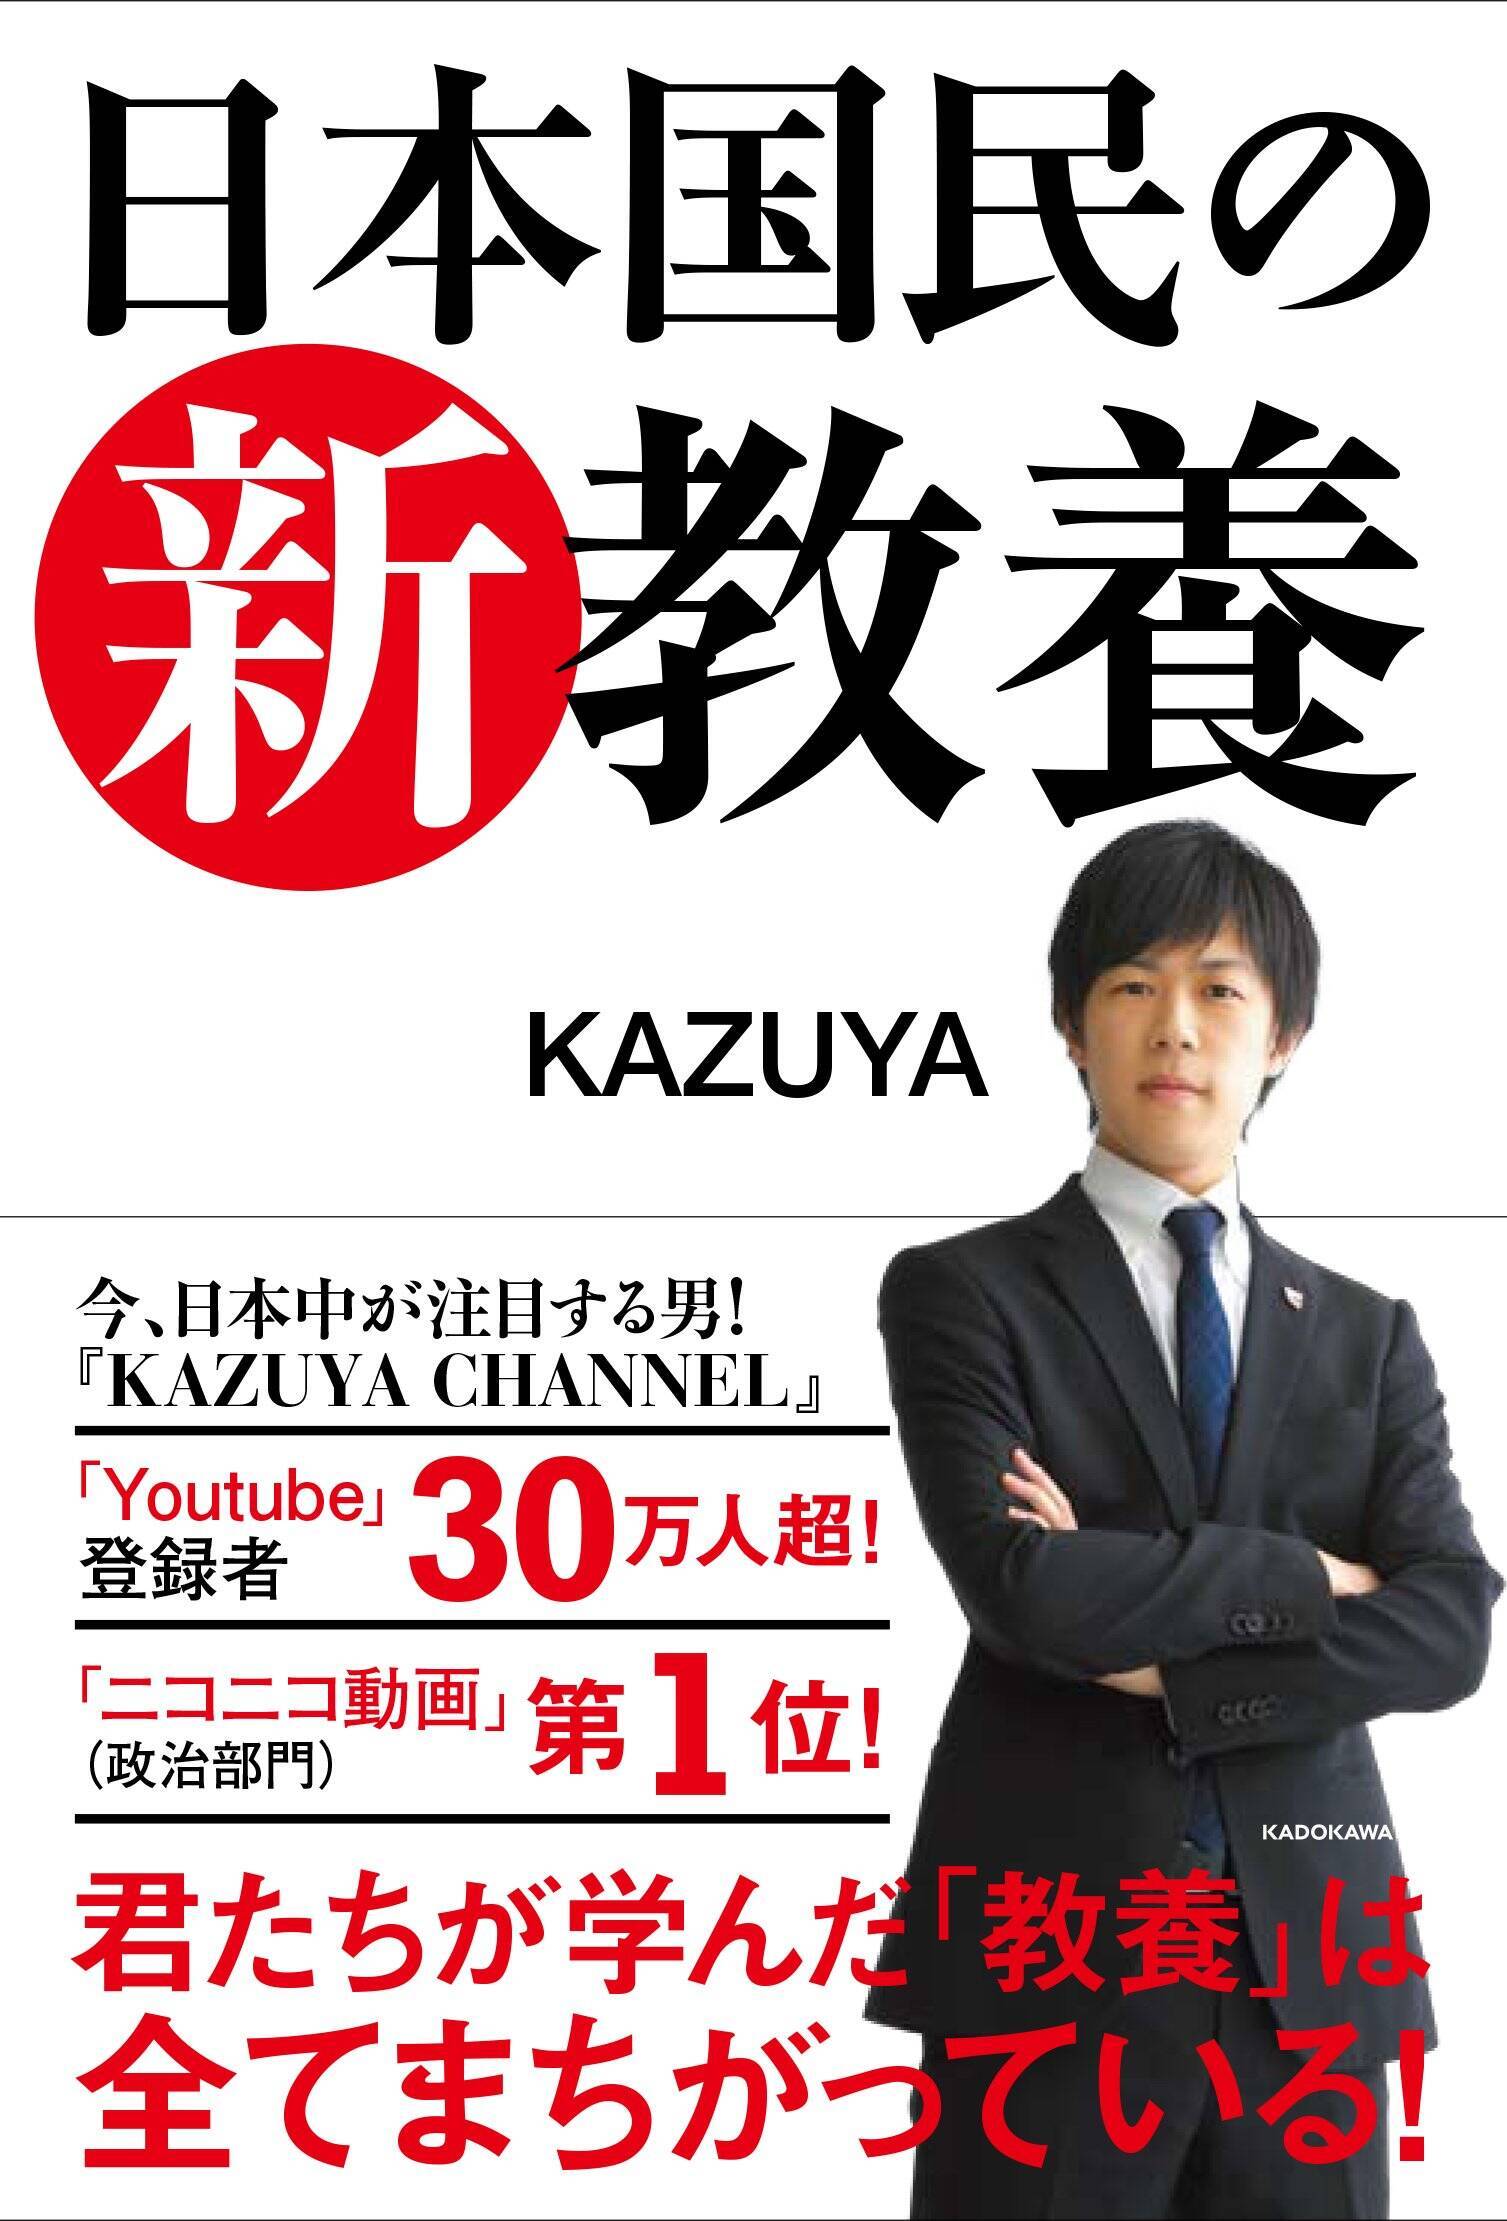 Tvも新聞も見ない若者はyoutuber Kazuya で政治を知る エキサイトニュース